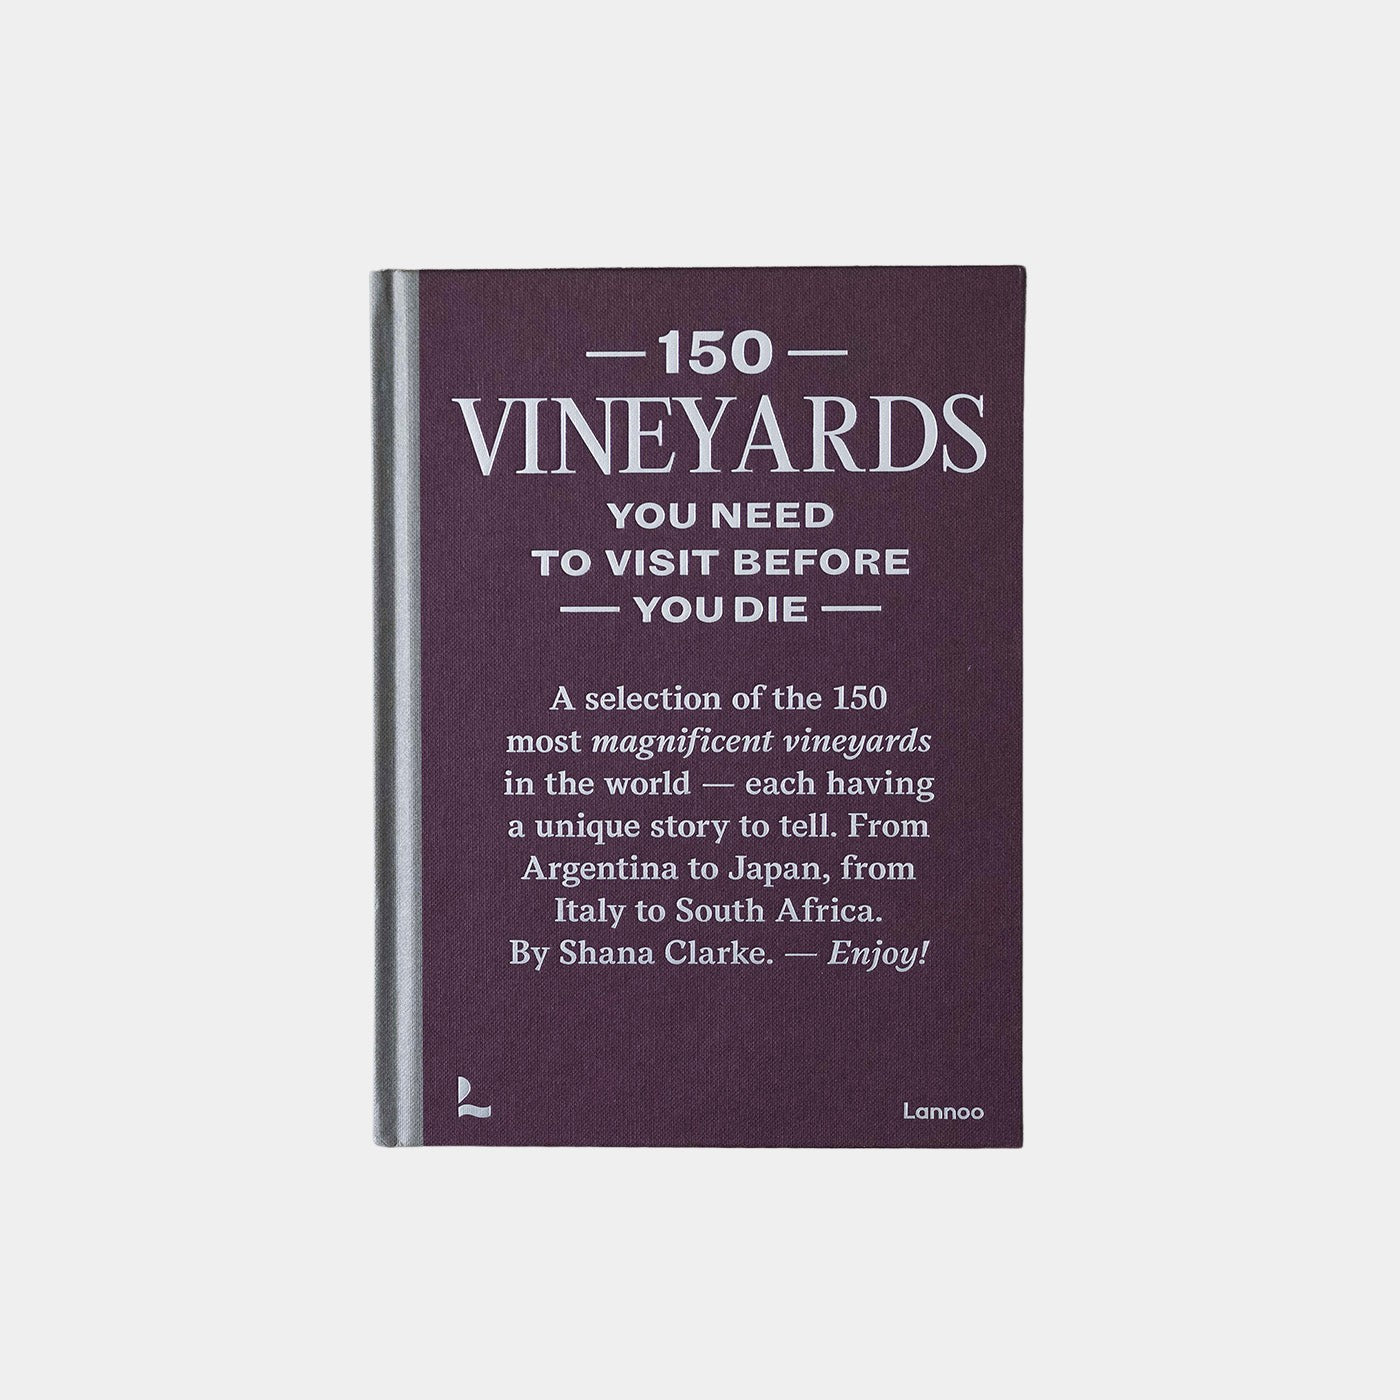 150 Vineyards you need to visit before you die